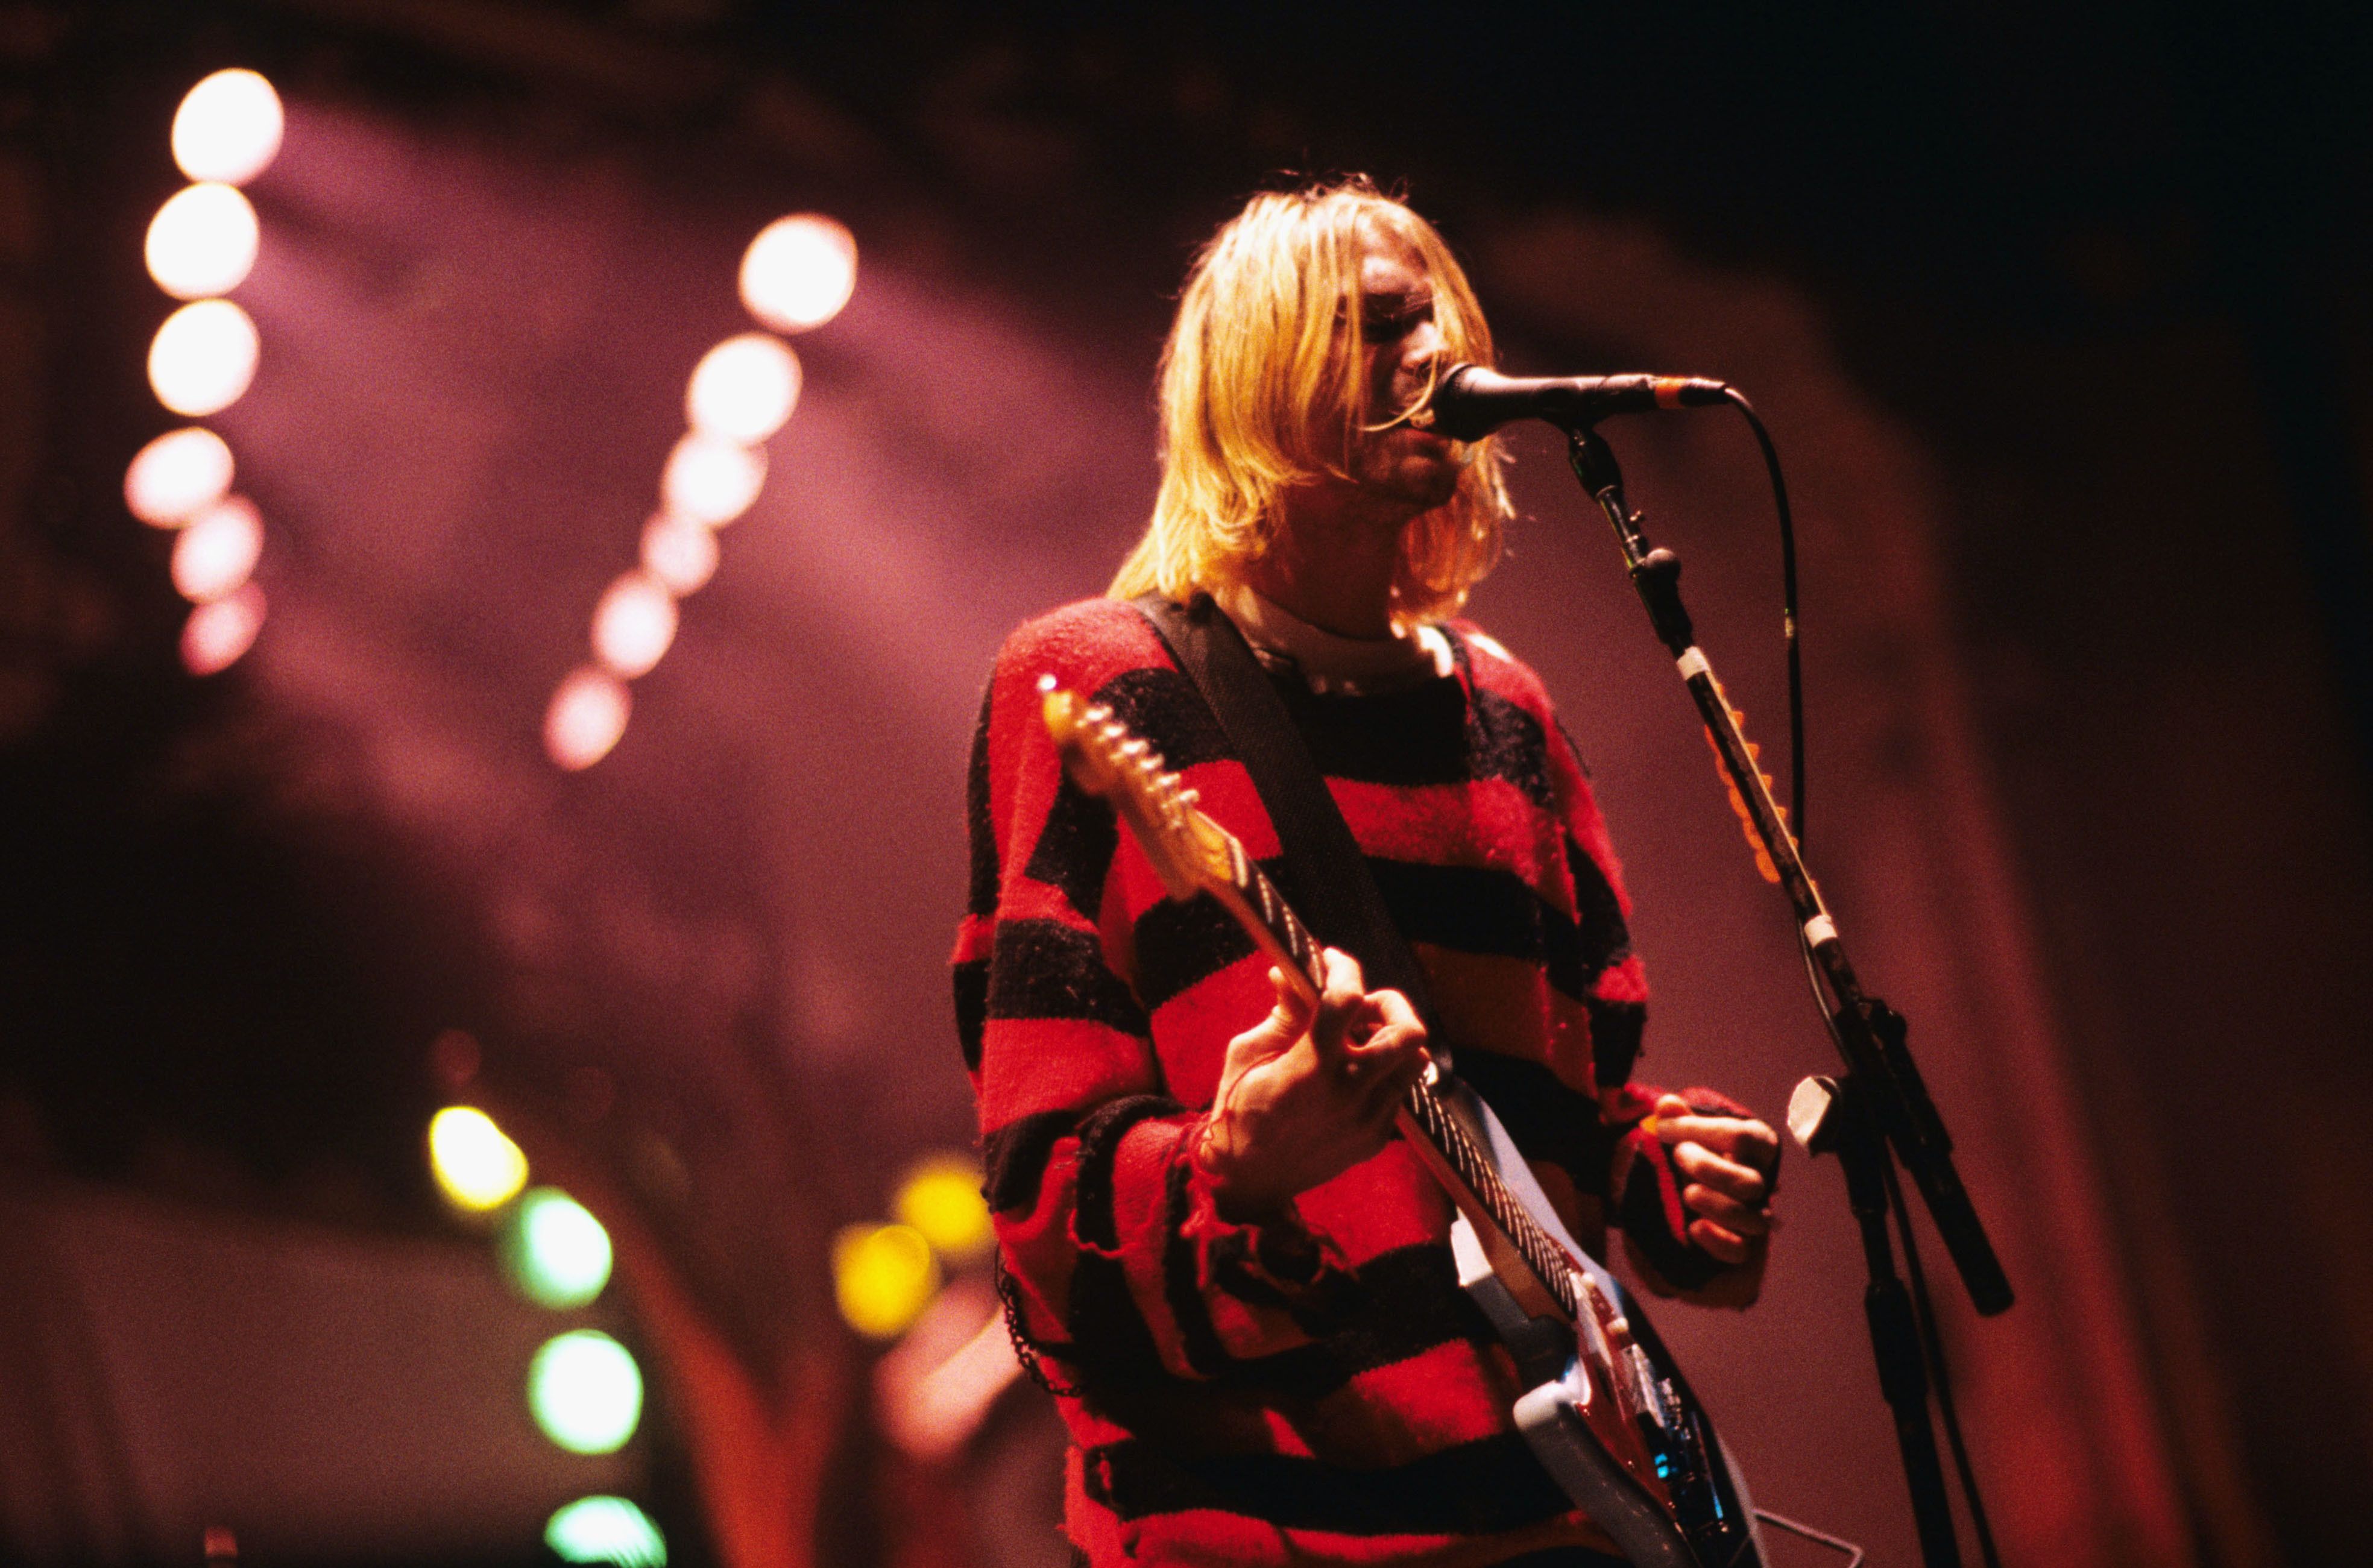 Kurt Cobain Wallpaper Image Photo Picture Background